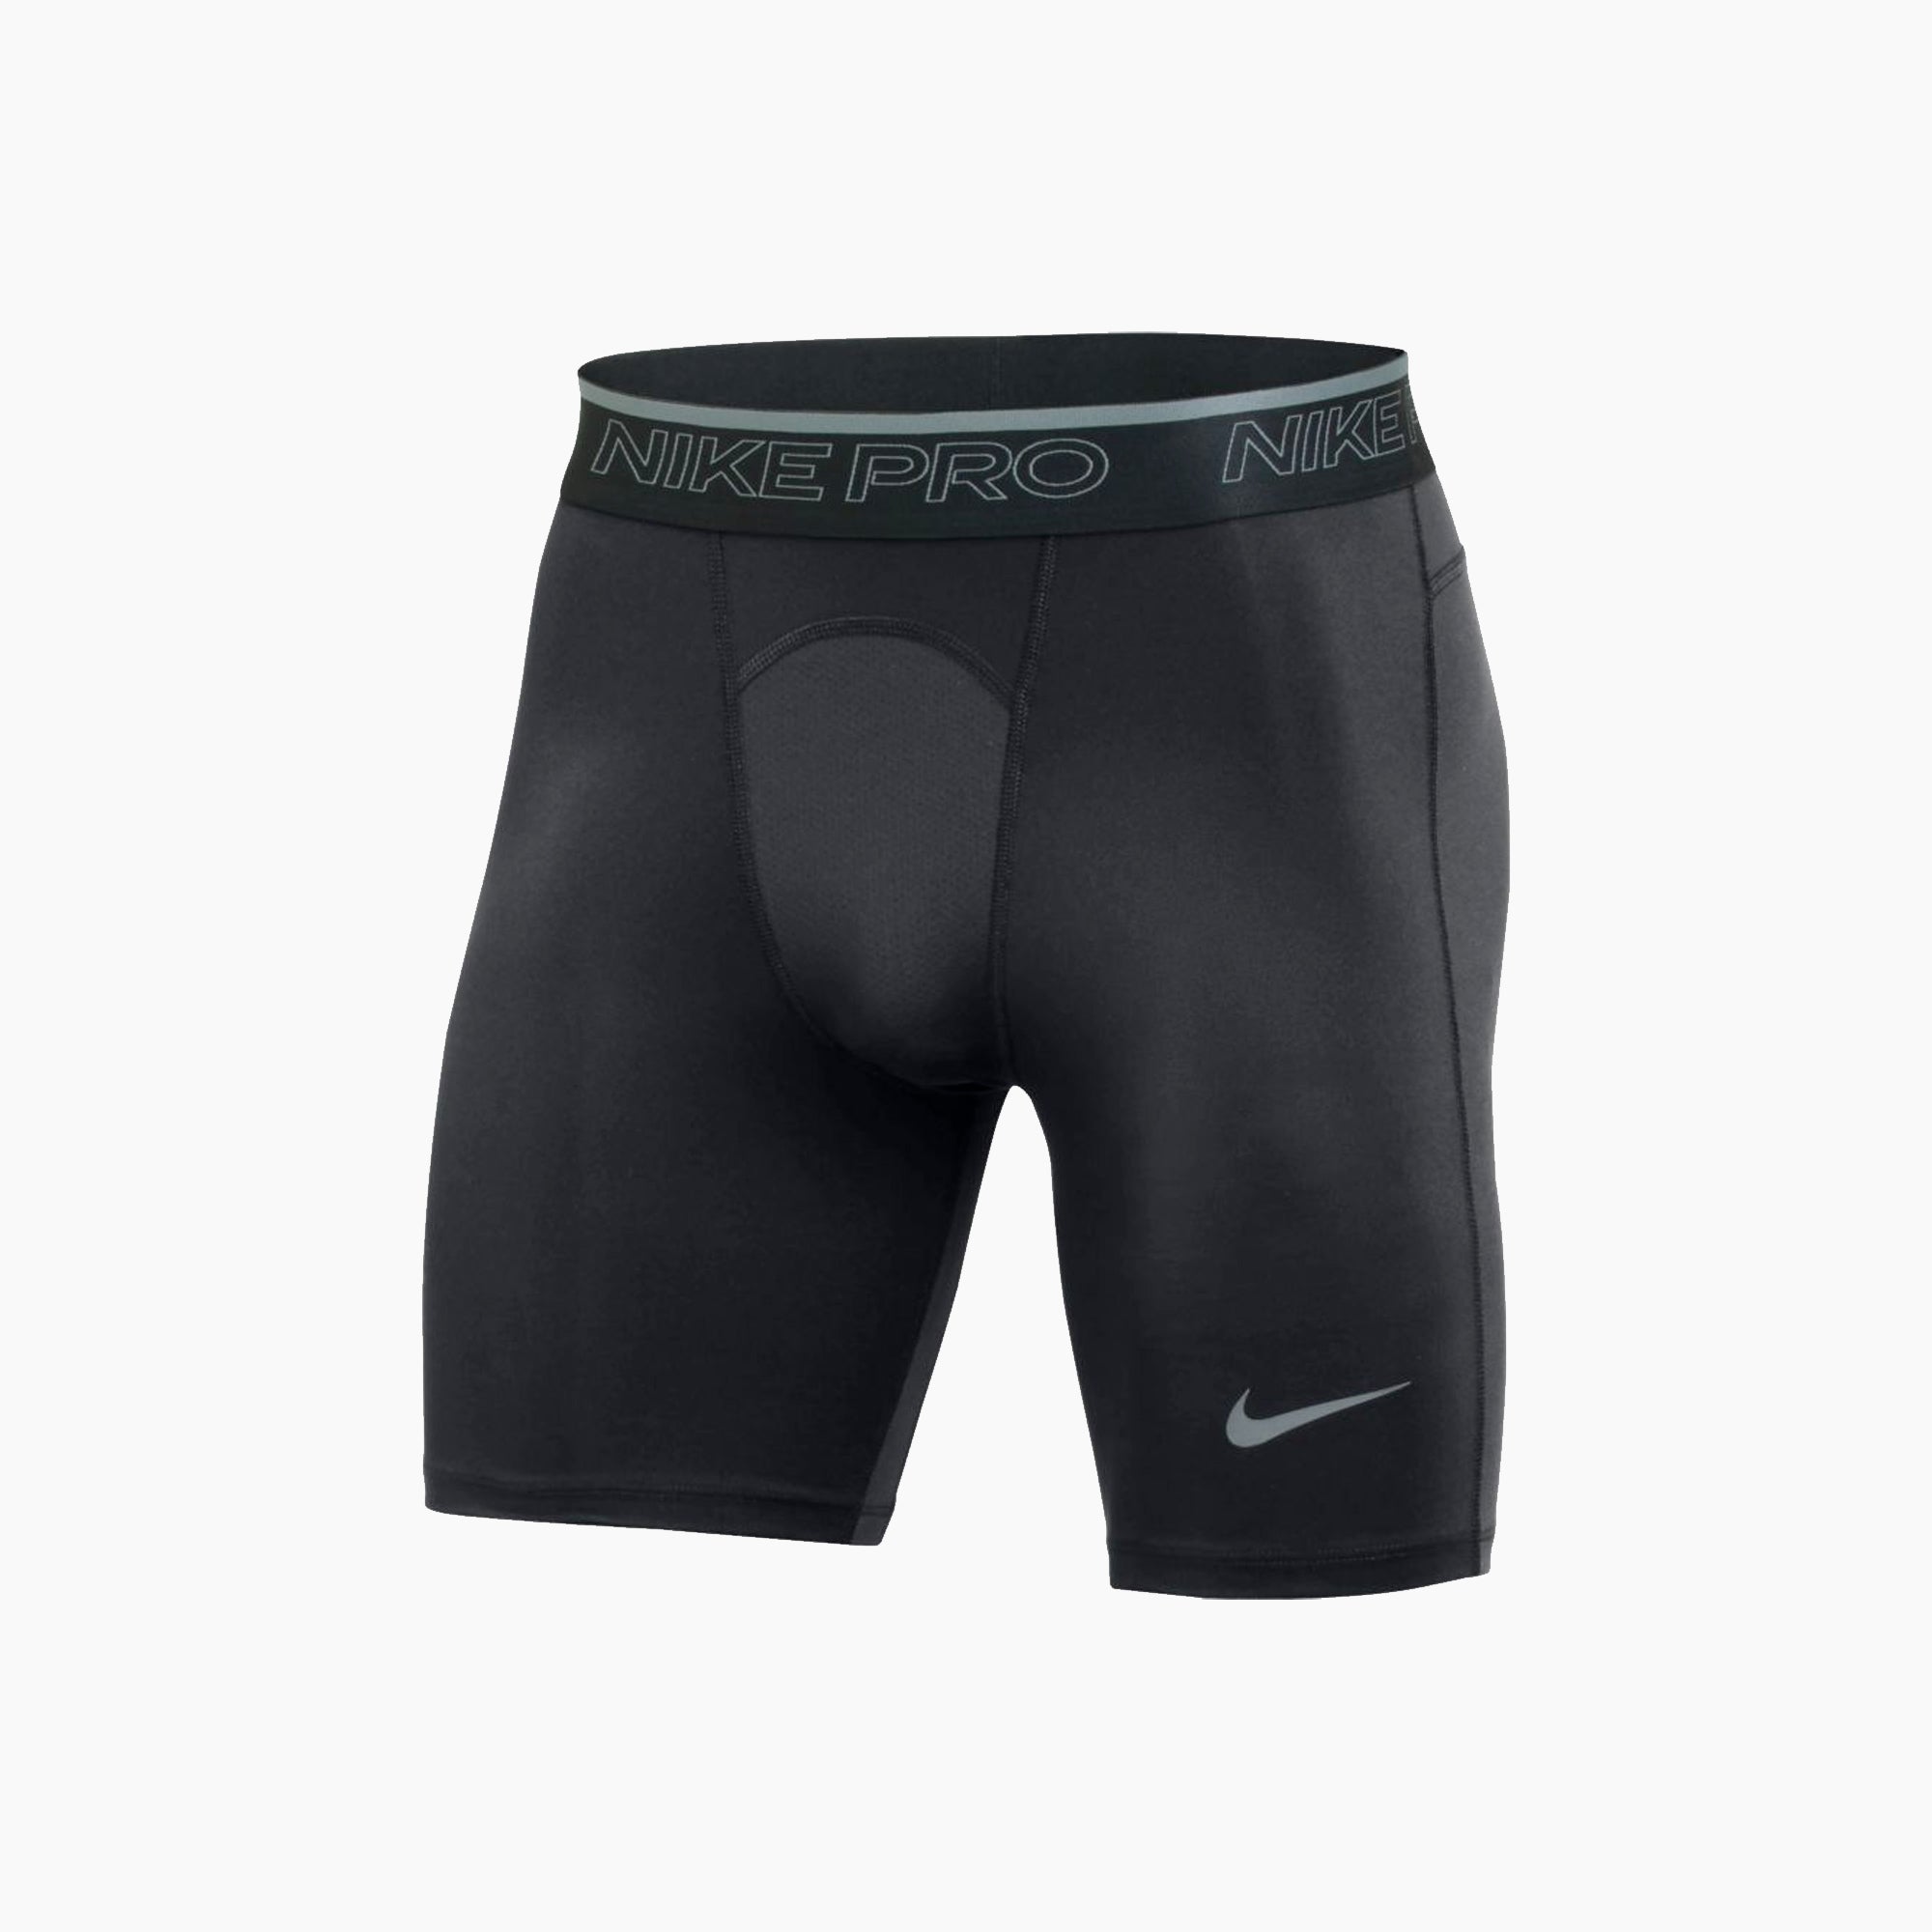 Nike Pro Men's Compression Shorts